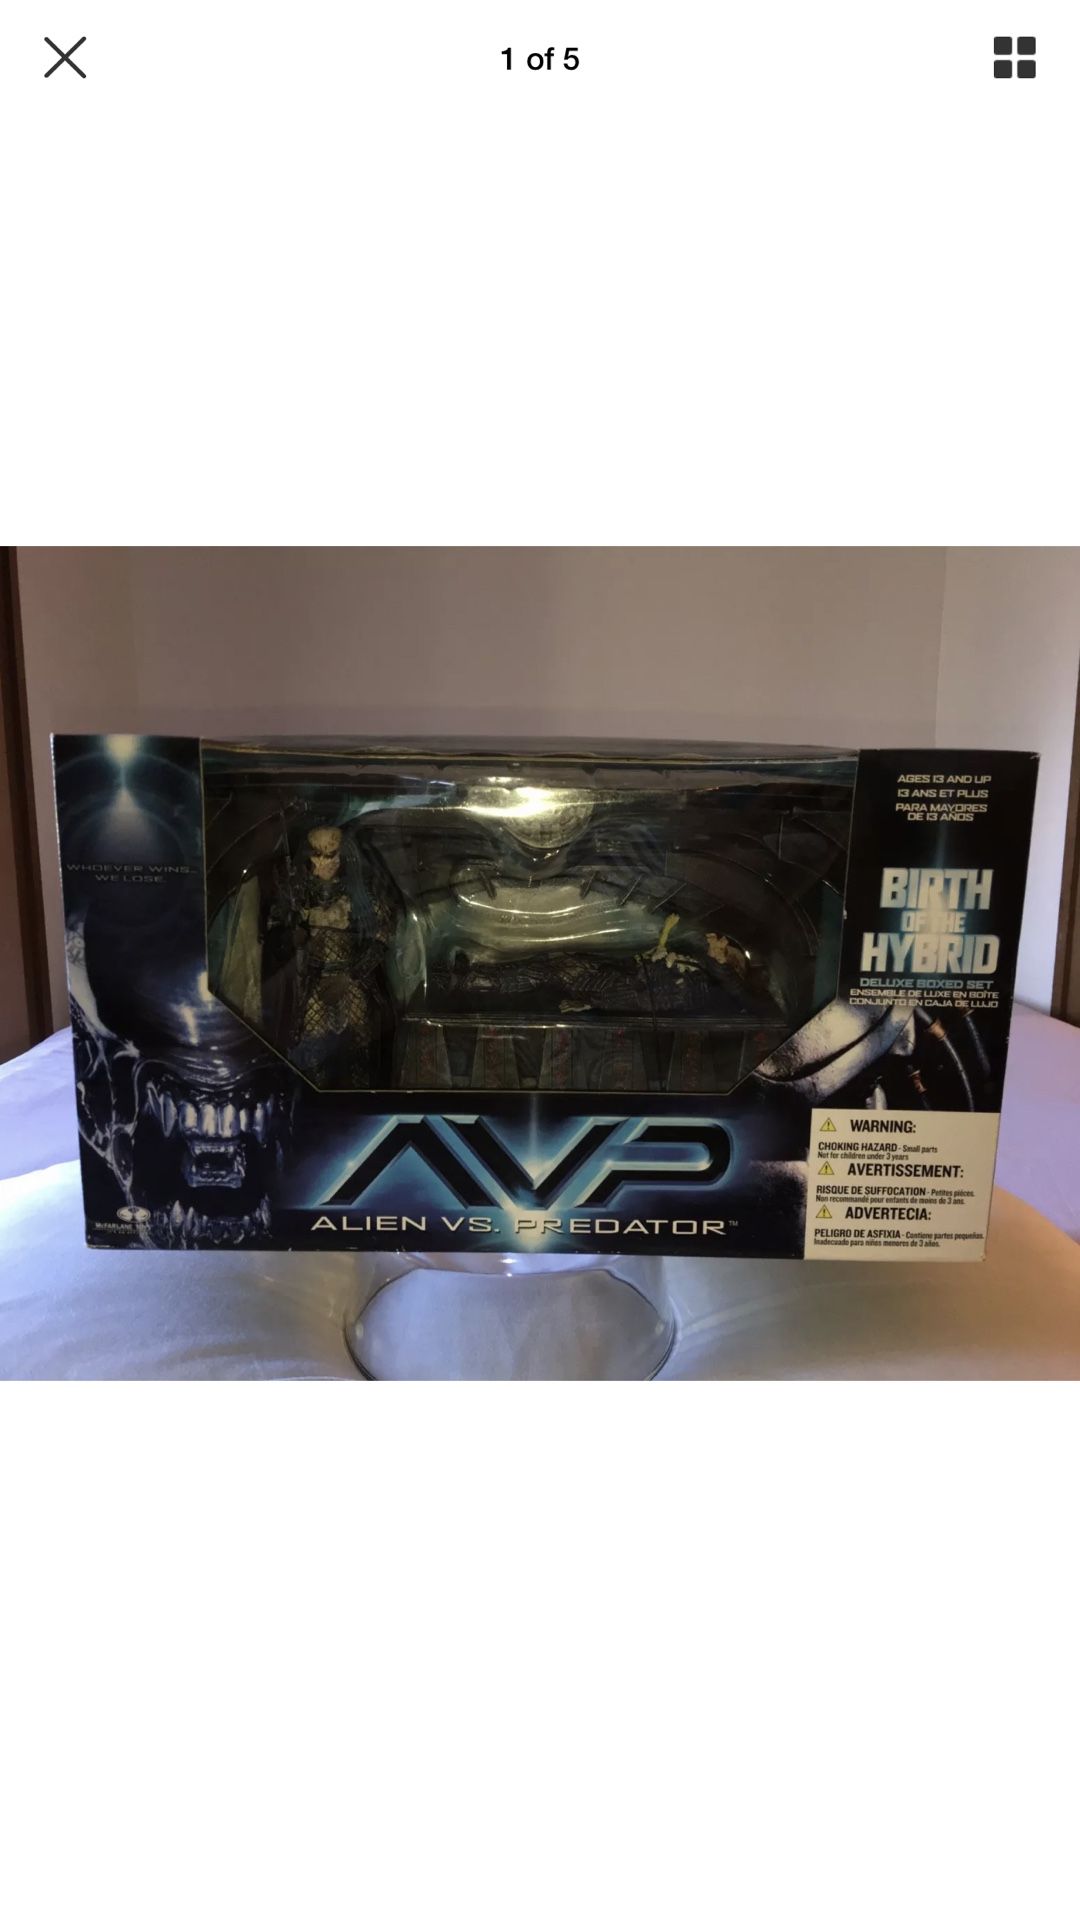 AVP Alien vs. Predator Birth of the Hybrid Mcfarlane Figure set New in Box